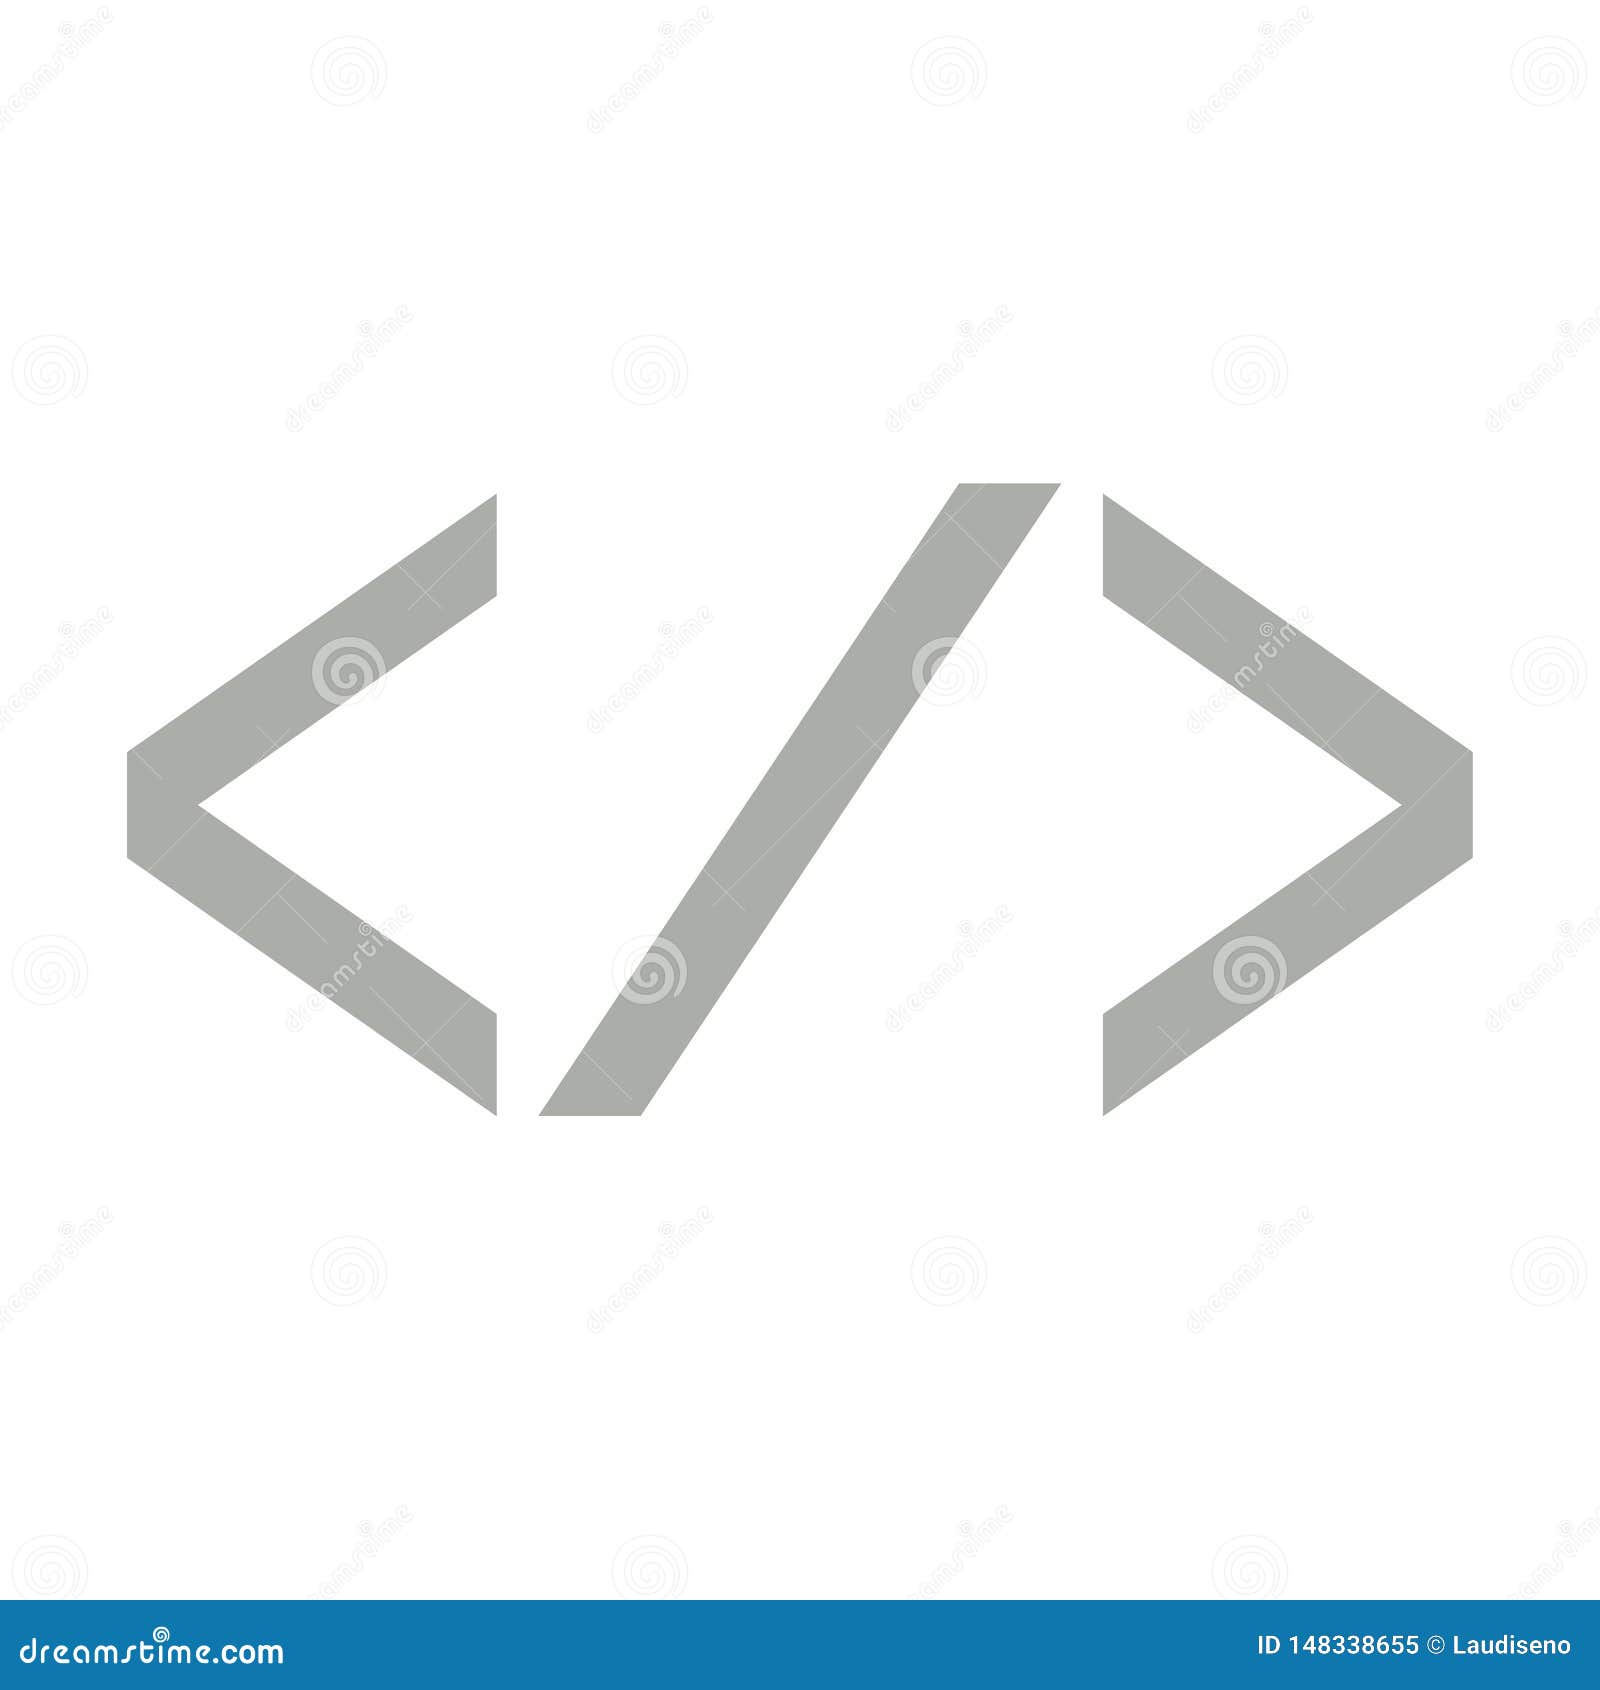 Code Slash Symbol Vector Images (58)